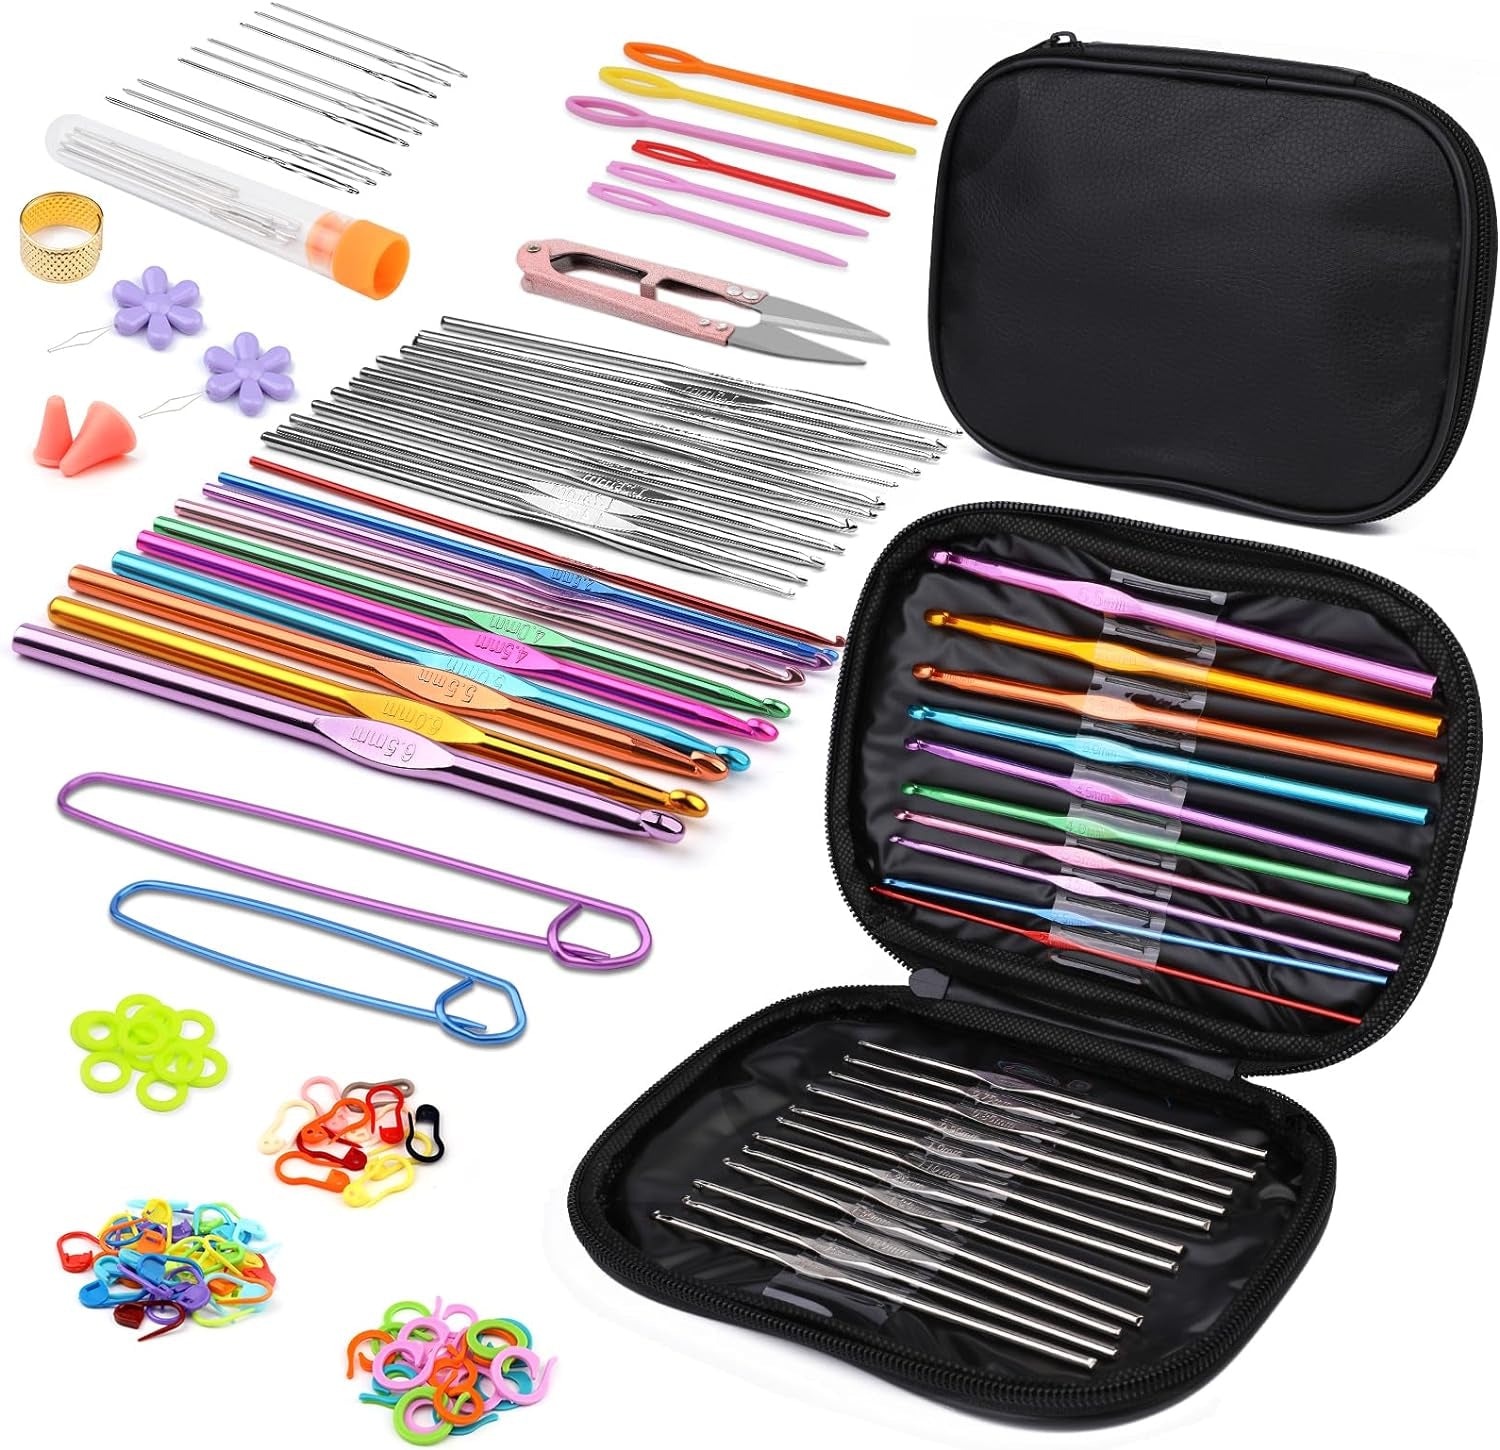 54 Pcs Crochet Needles Set, Crochet Hooks Kit with Storage Case, Ergonomic Knitting Needles Blunt Needles Stitch Marker DIY Hand Knitting Craft Art Tools for Beginners